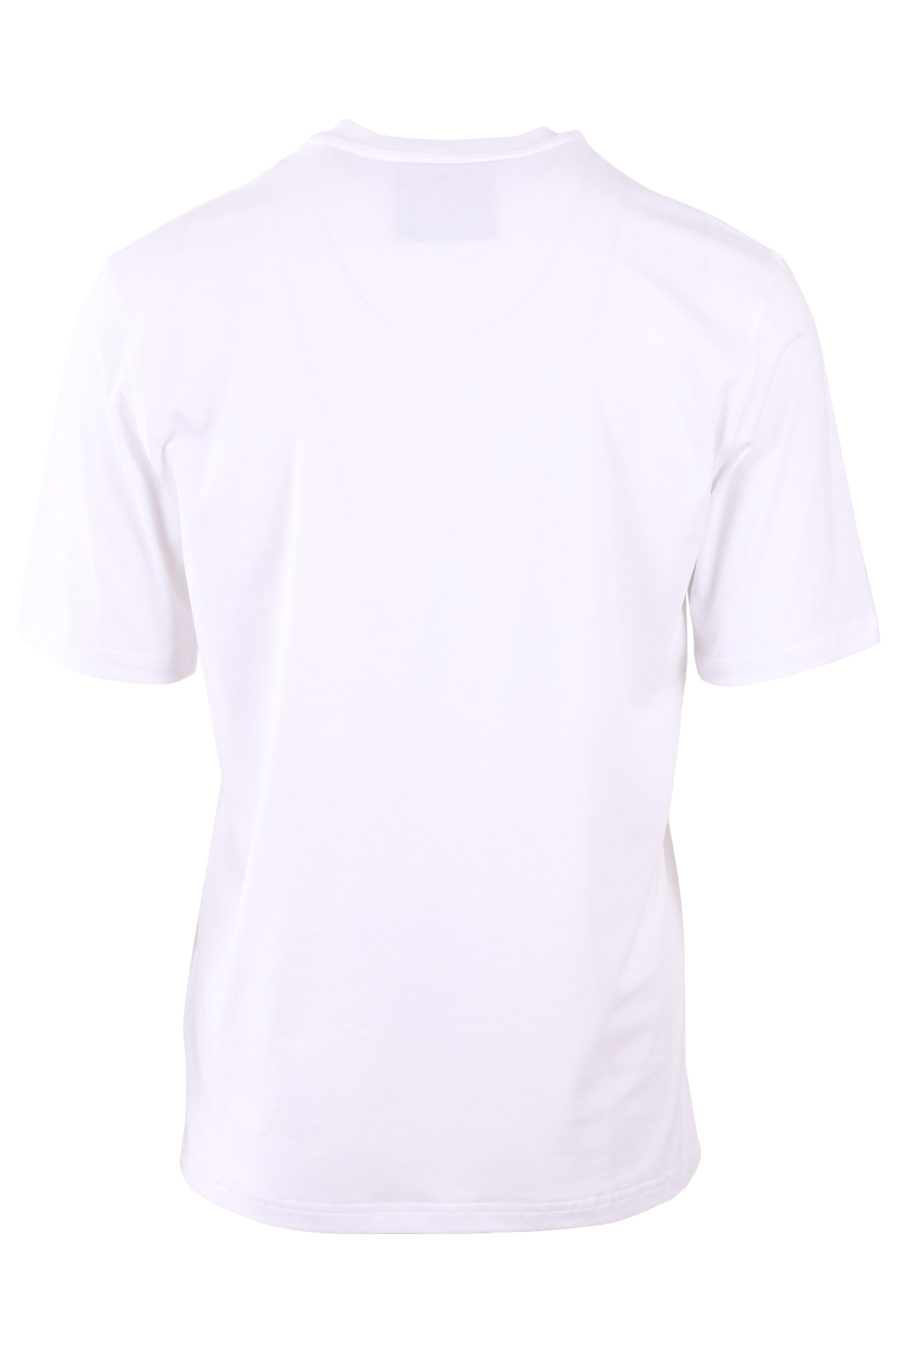 T-shirt blanc avec symboles du logo - 6c95c609fb18d2f6944af2c784948aa44dce5a9